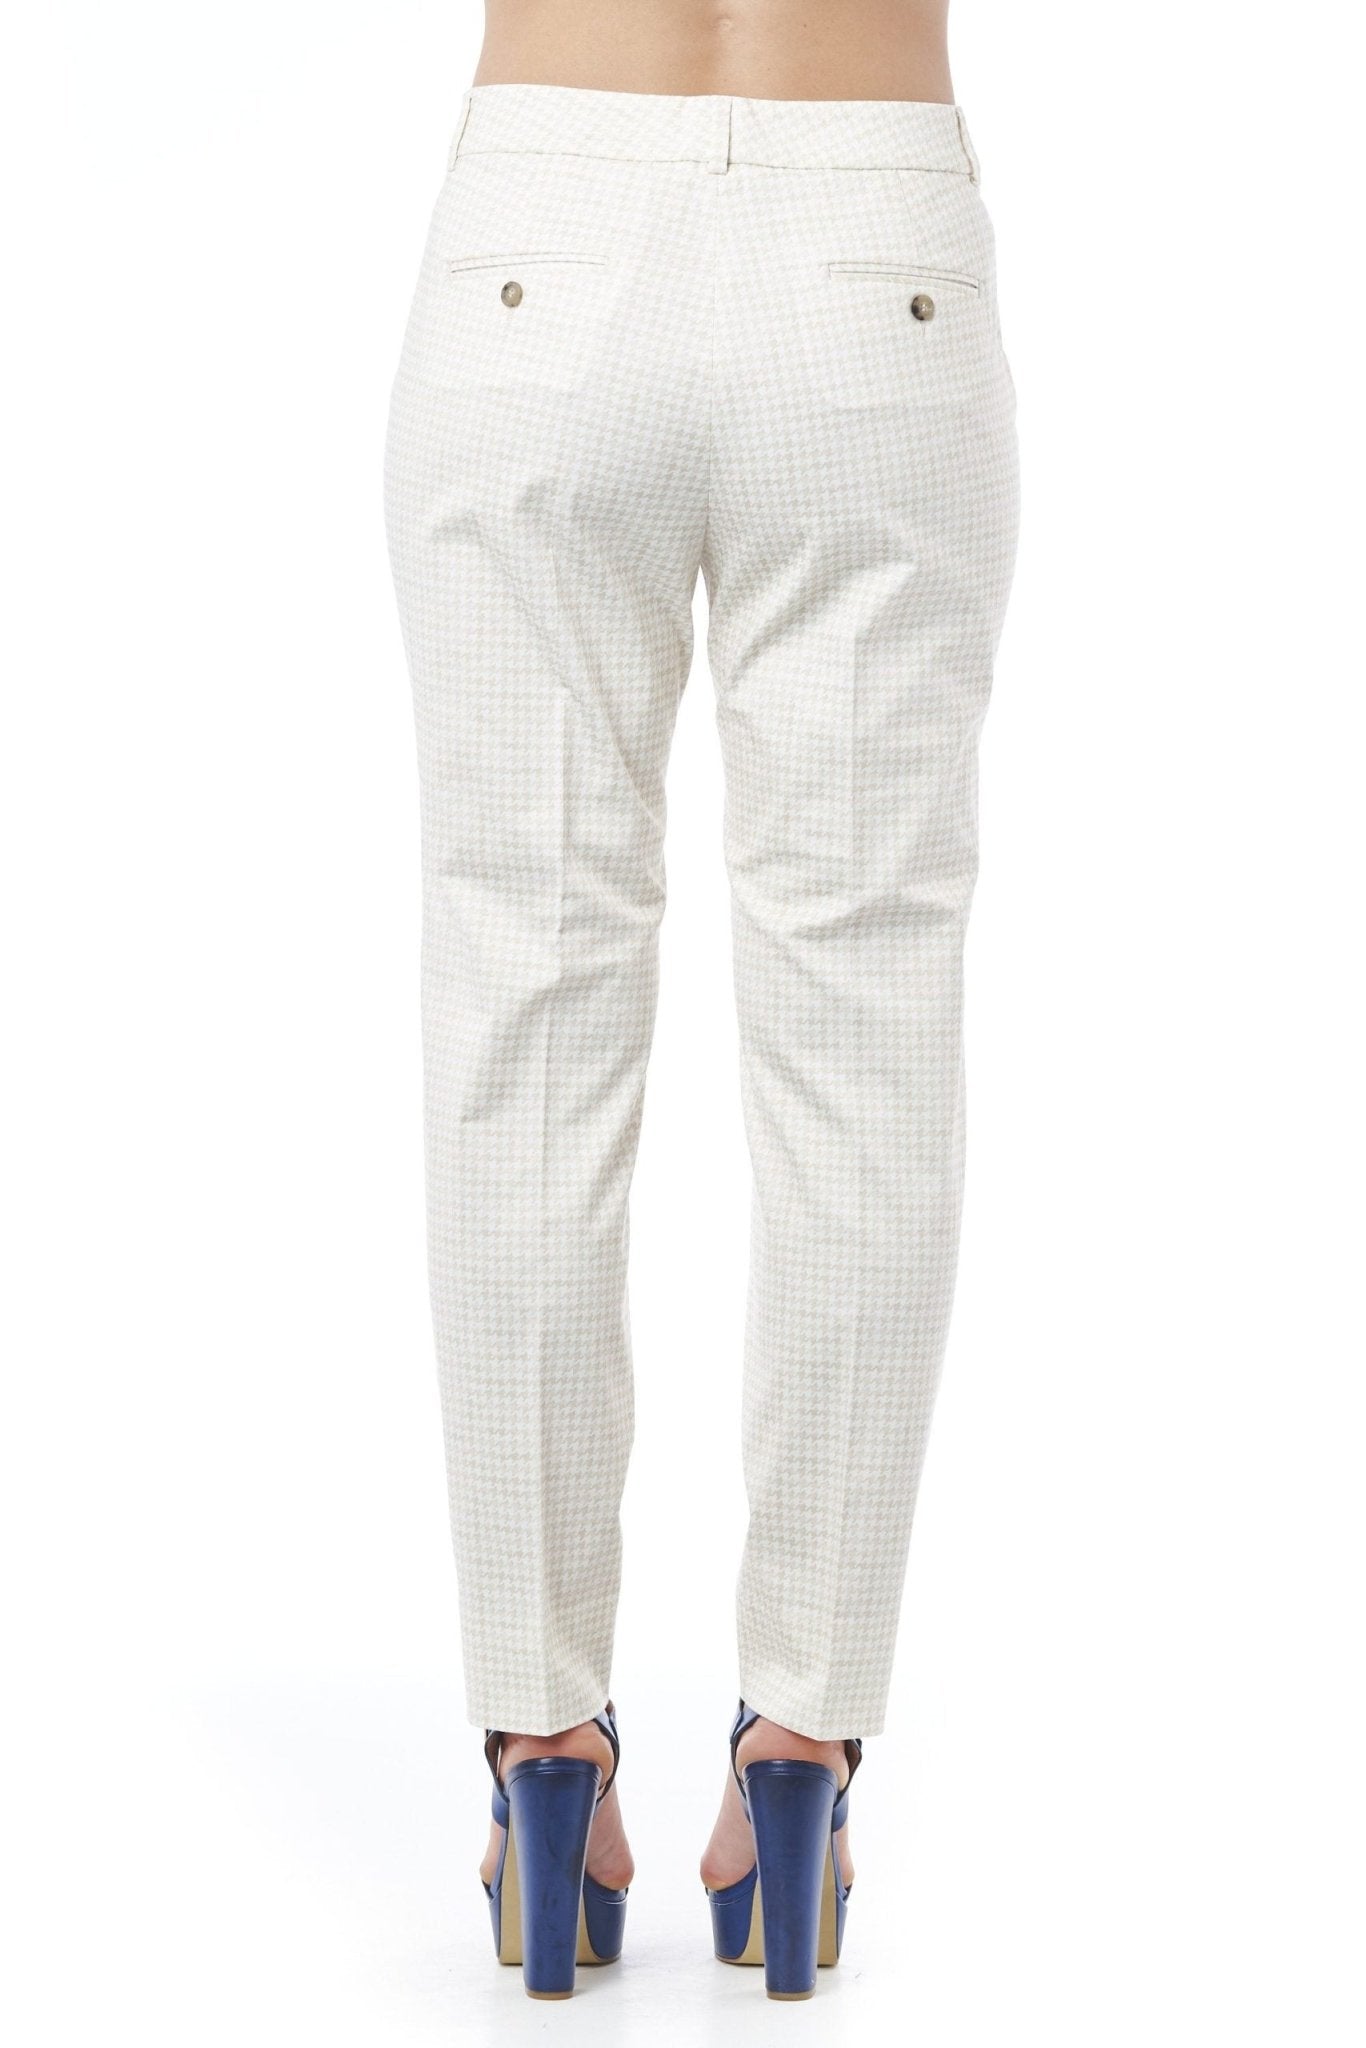 Peserico Beige Cotton Jeans & Pant - Fizigo